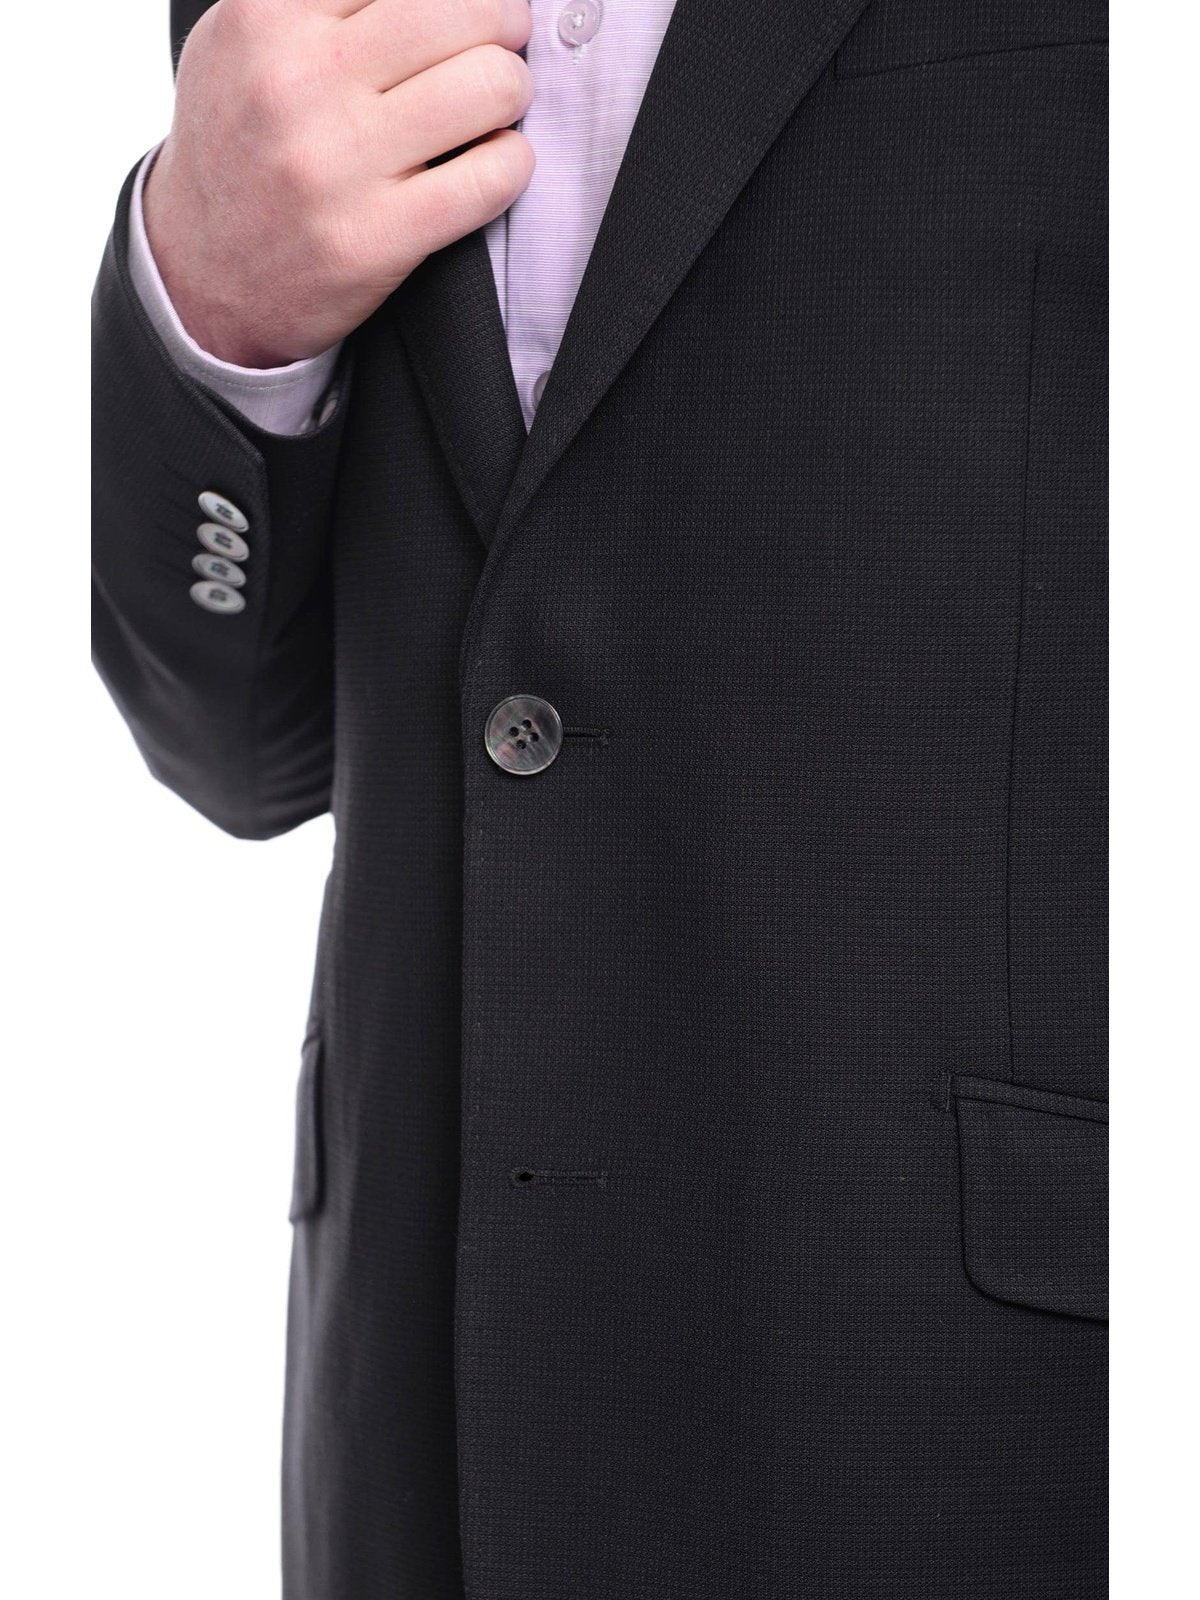 Napoli BLAZERS Napoli Slim Fit Black Textured Half Canvassed Zegna Wool Blazer Sportcoat